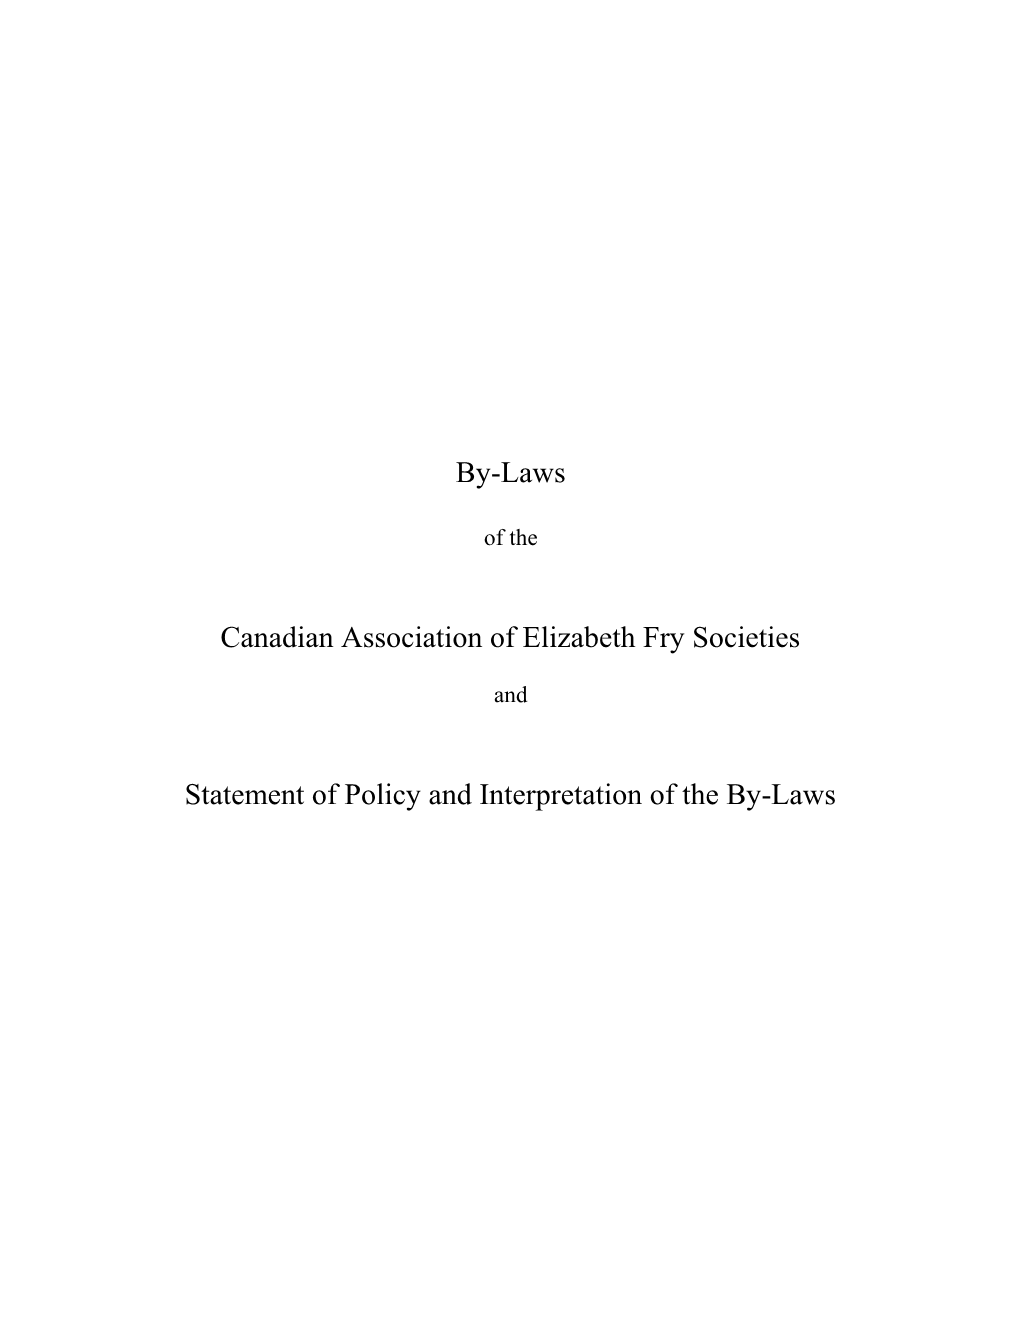 Canadian Association of Elizabeth Fry Societies